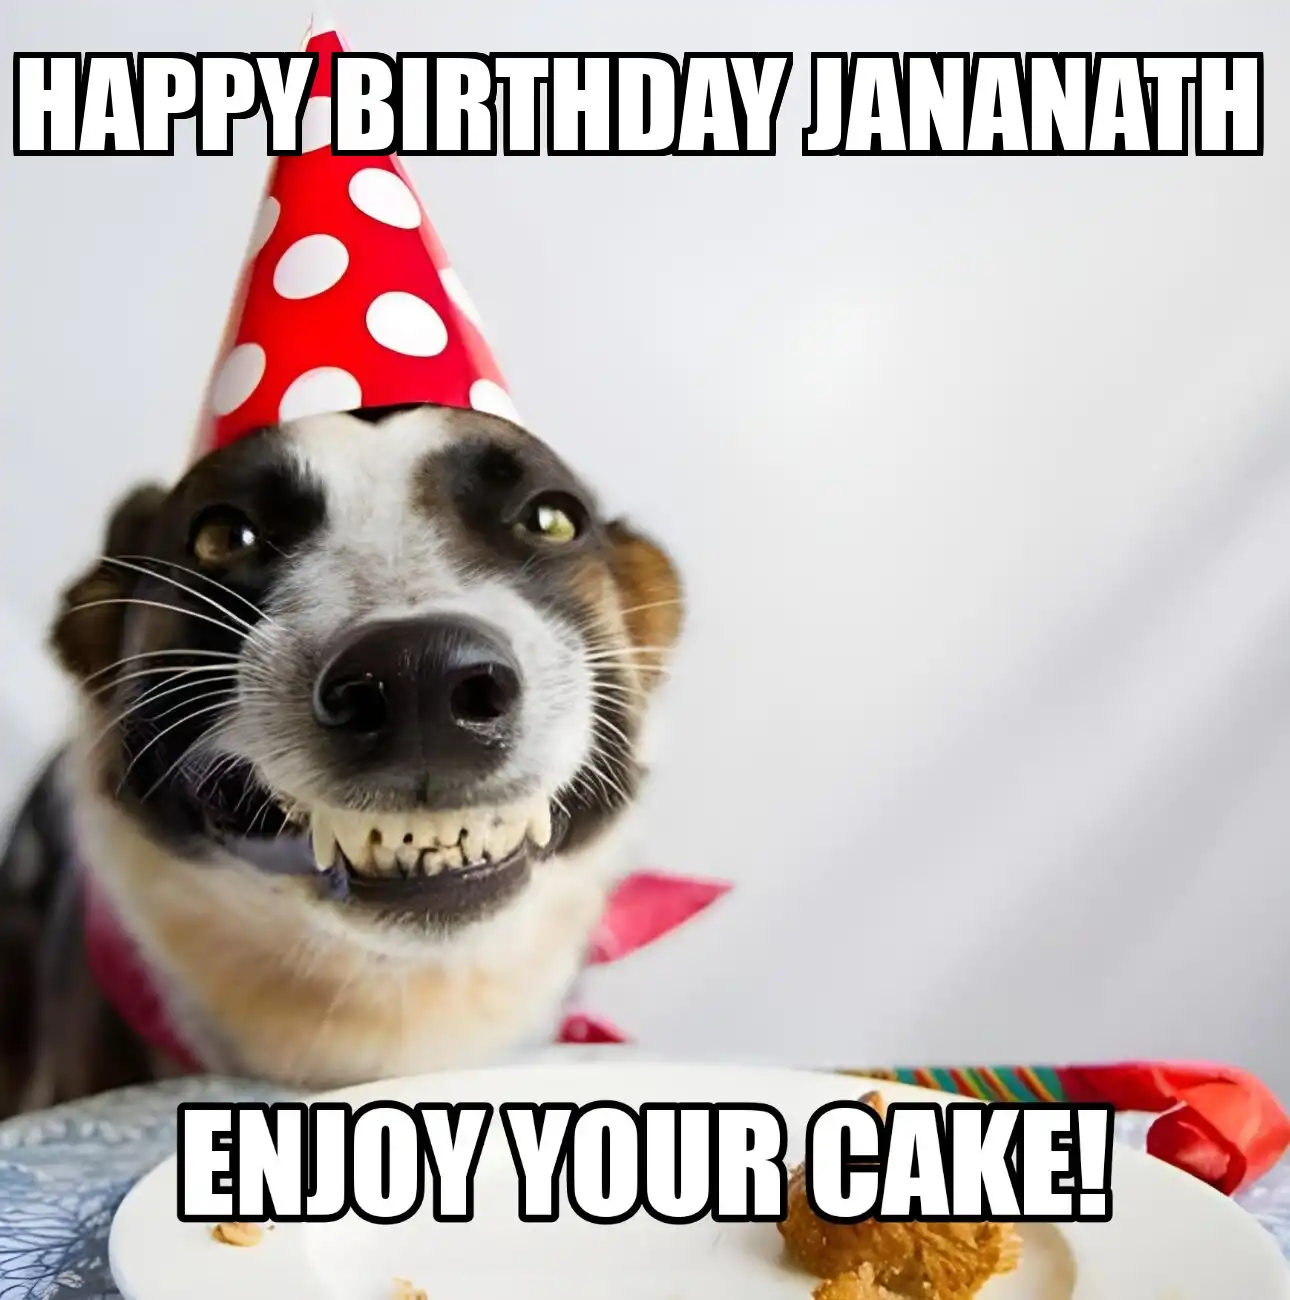 Happy Birthday Jananath Enjoy Your Cake Dog Meme